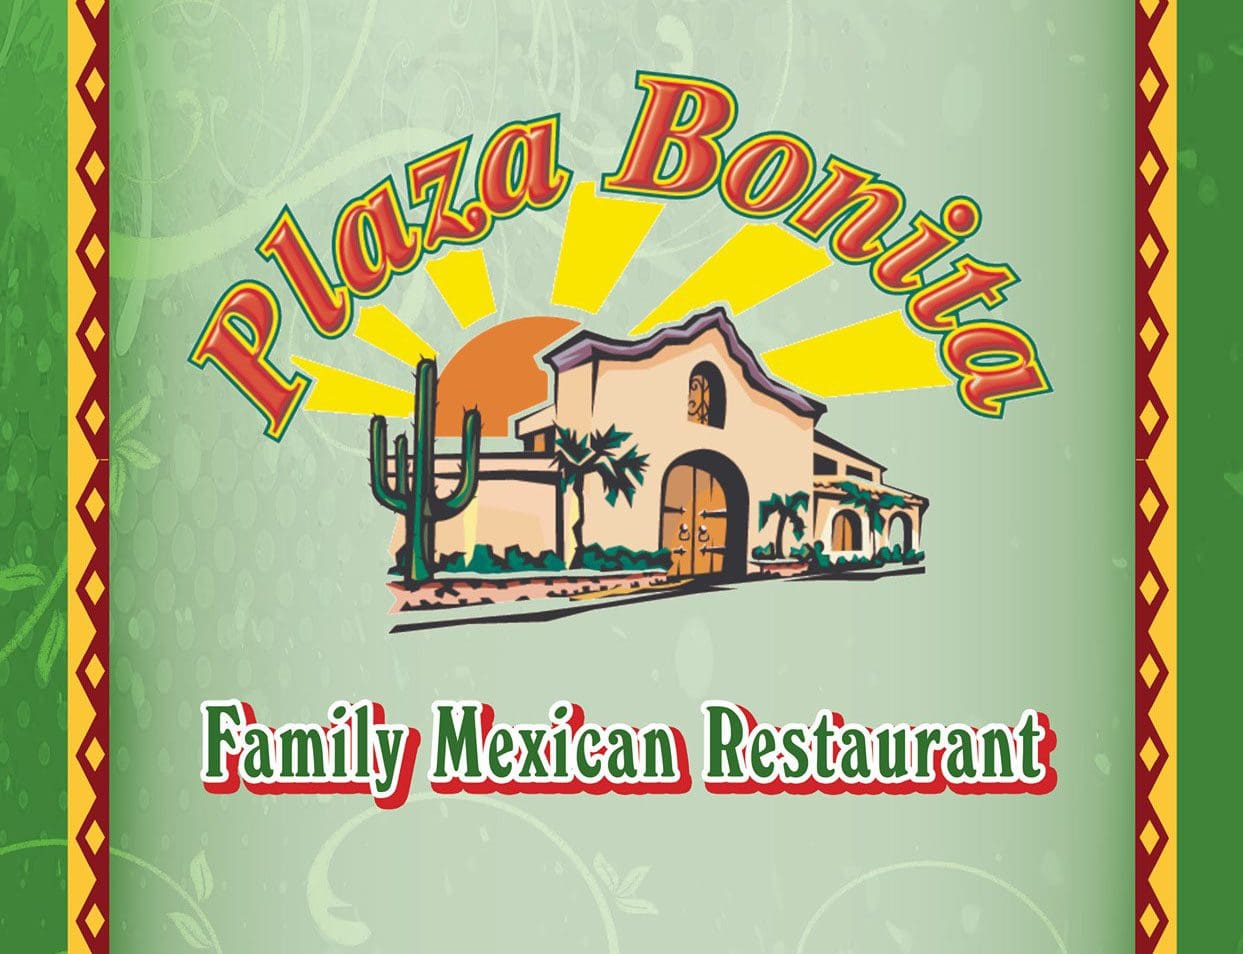 Plaza Bonita Family Mexican Restaurant logo